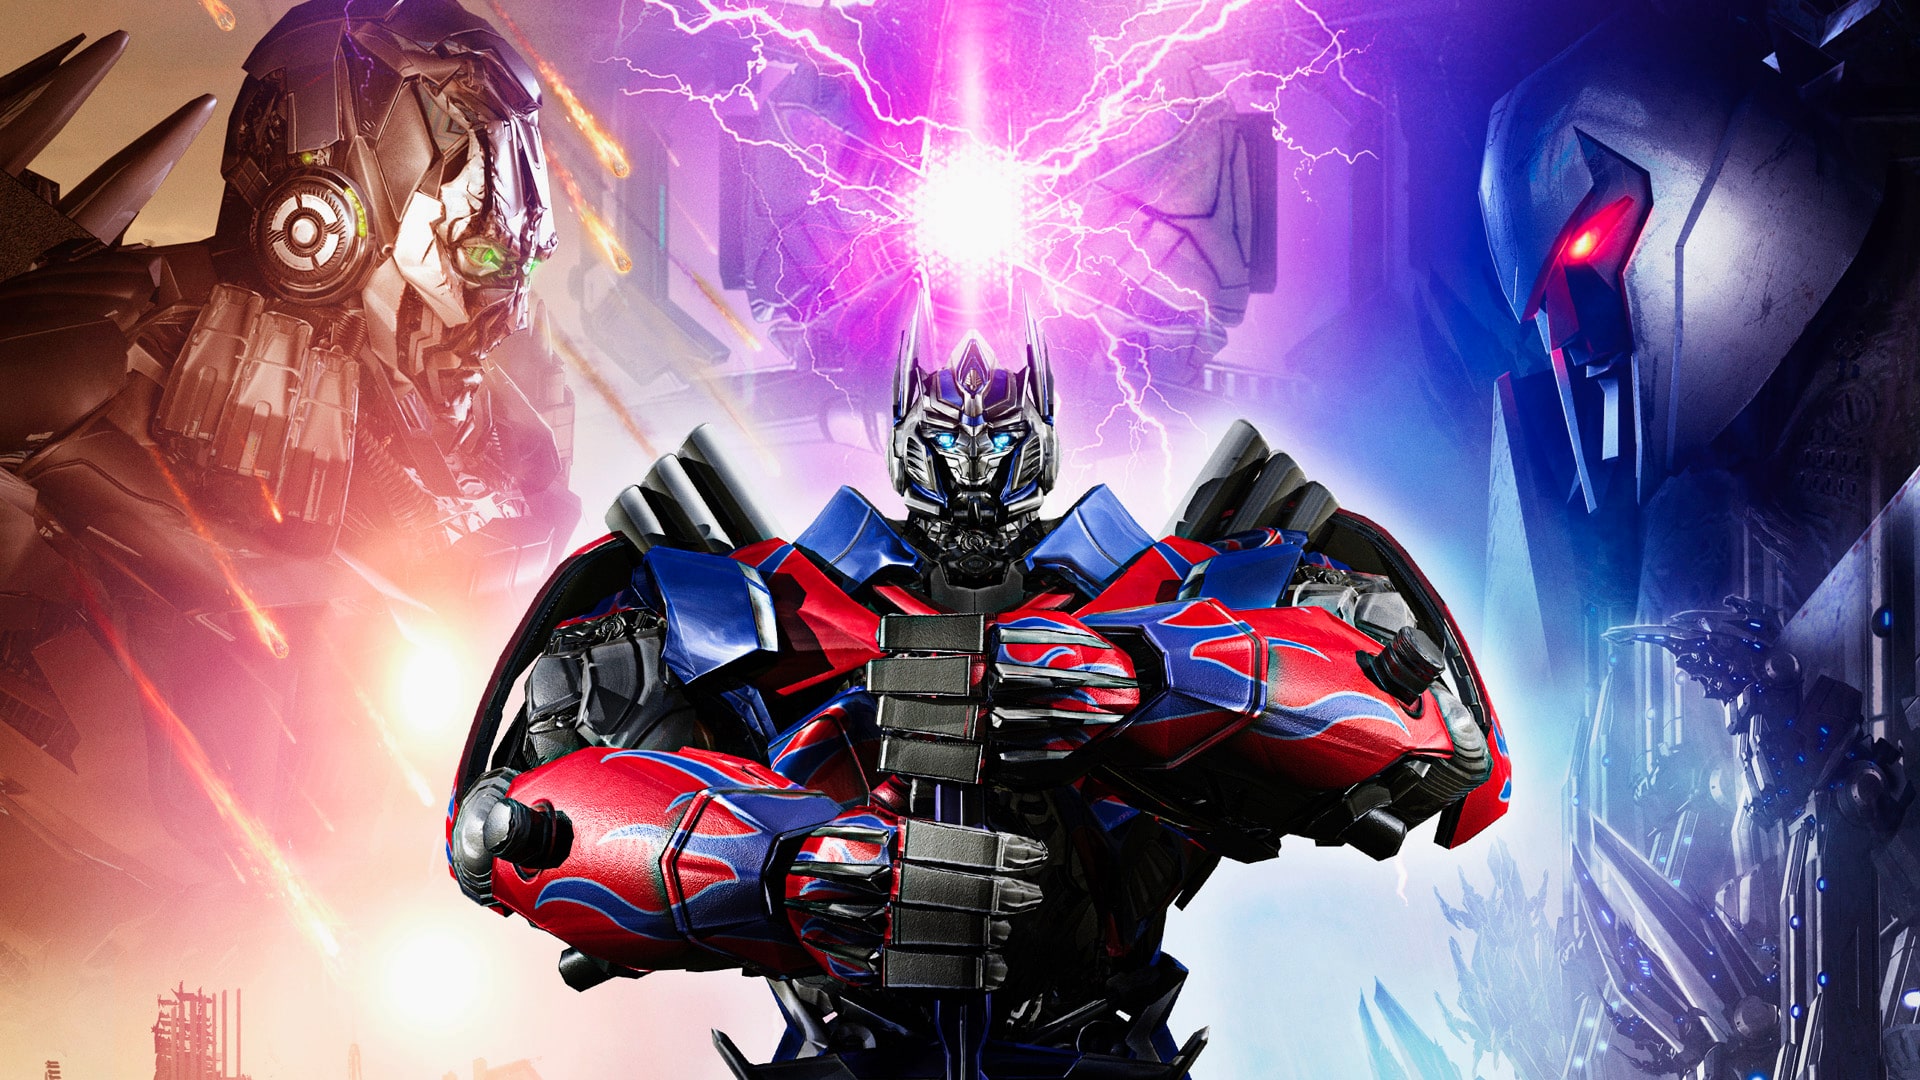 Transformers rise of dark spark steam фото 12